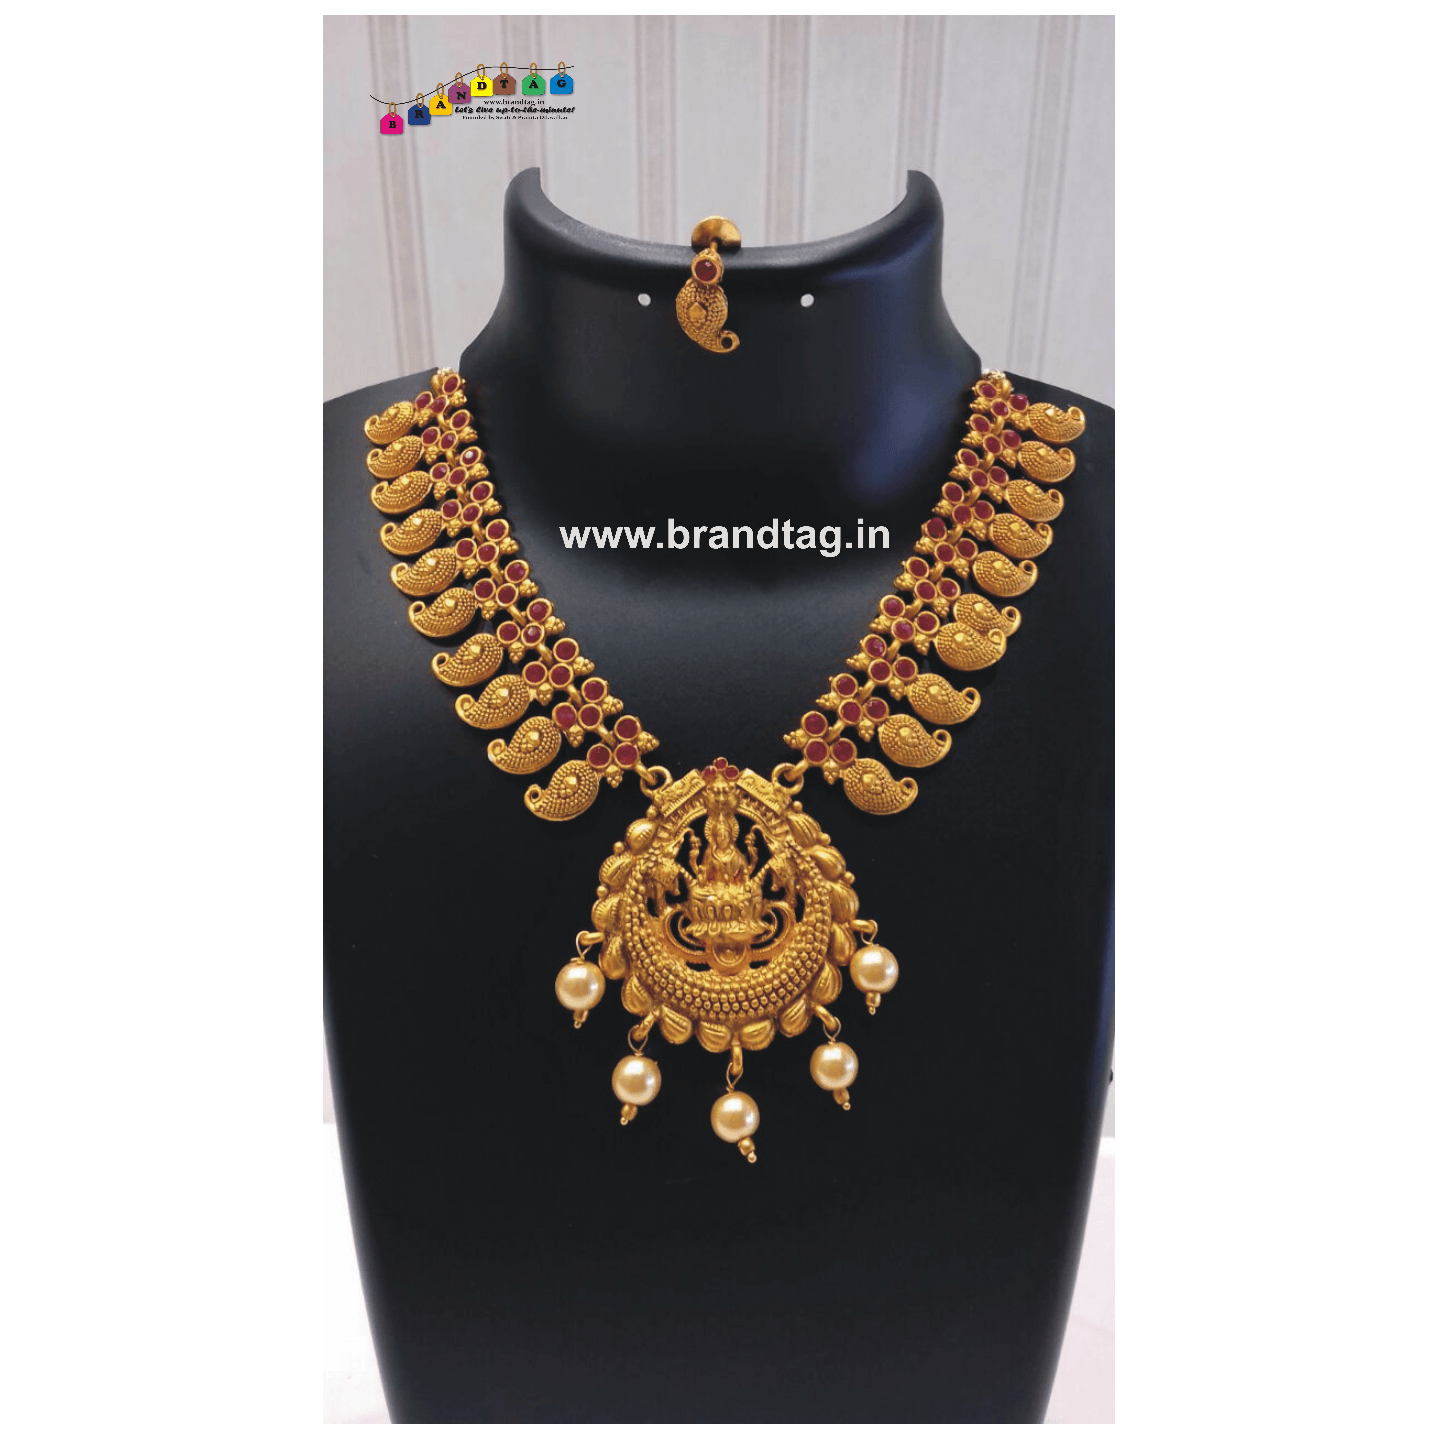 Diwali Collection - Laxmi Maa Golden Necklace set!